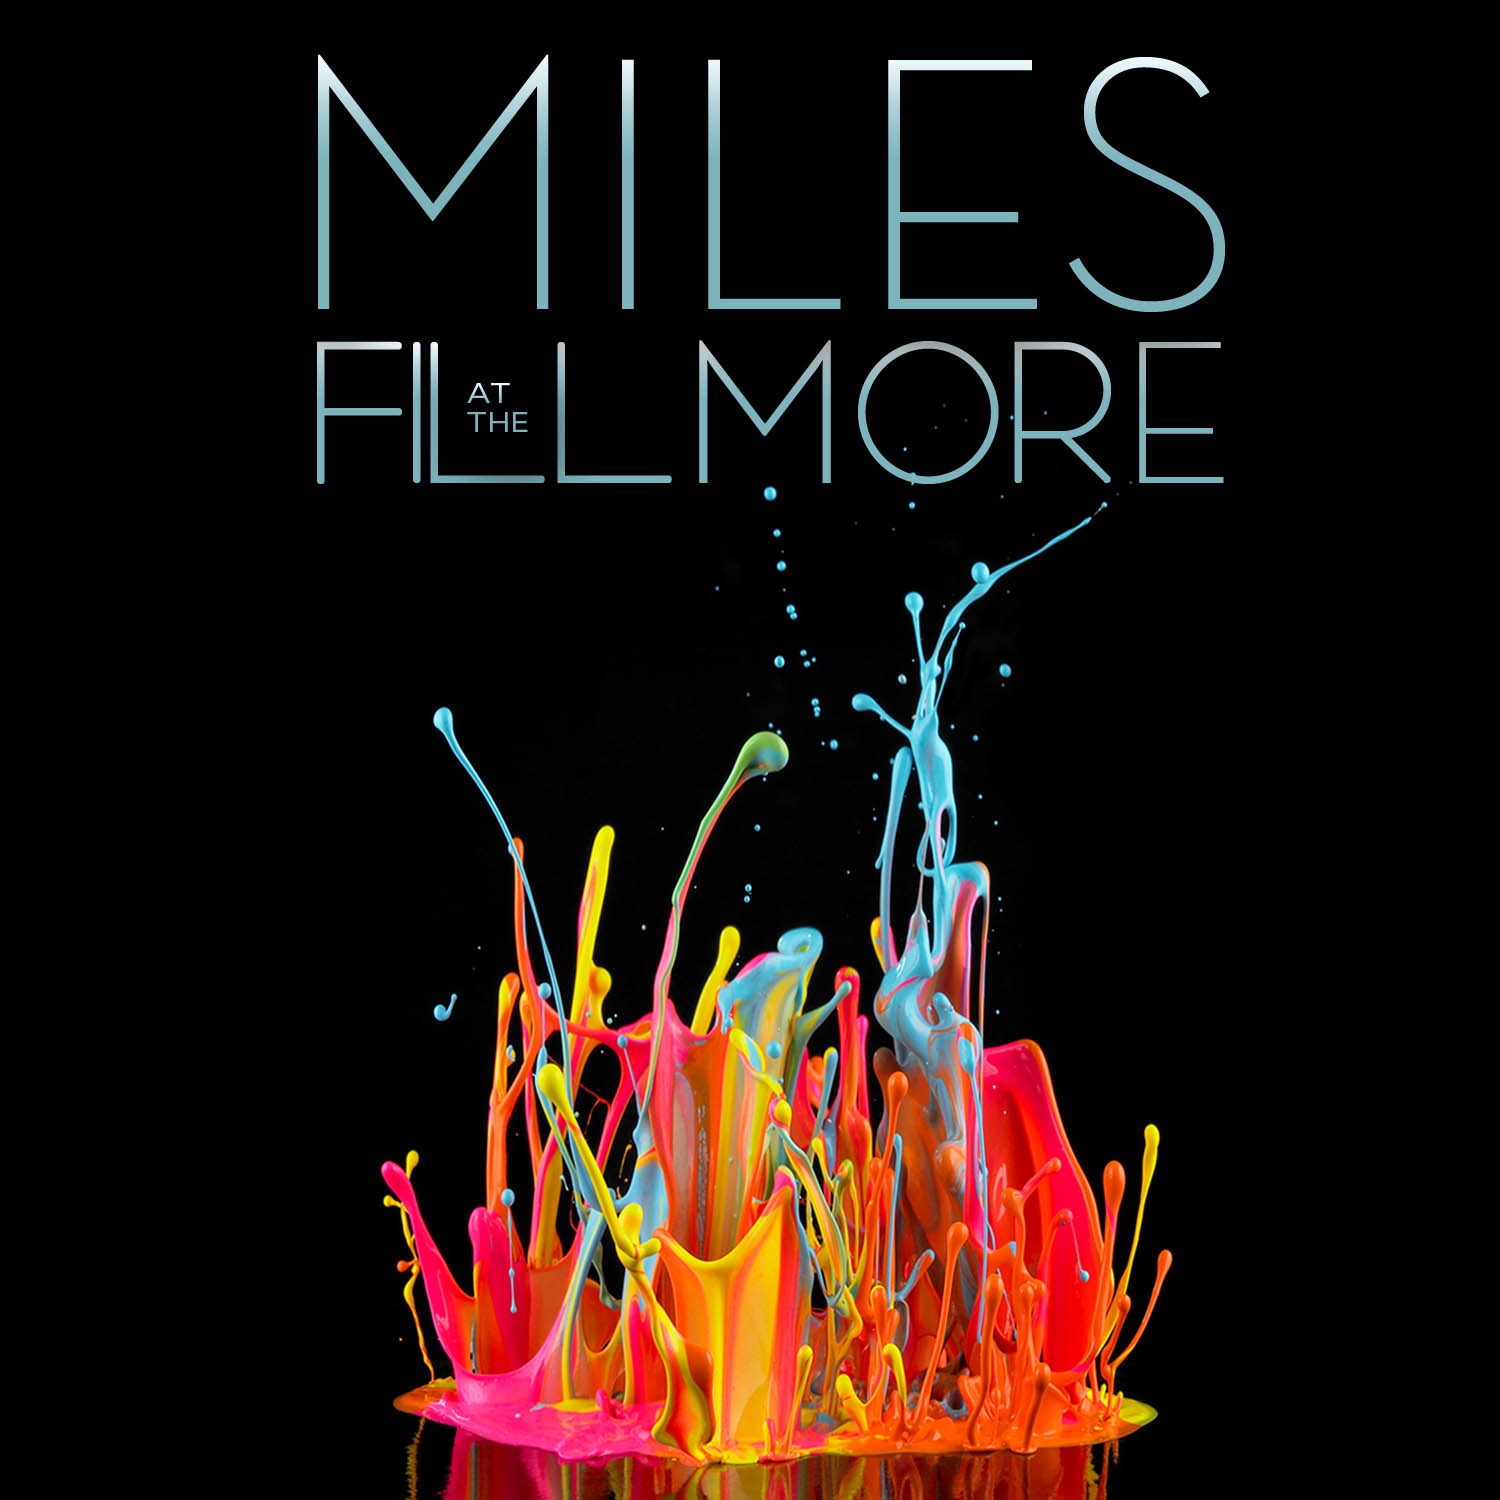 Miles Davis at the Fillmore